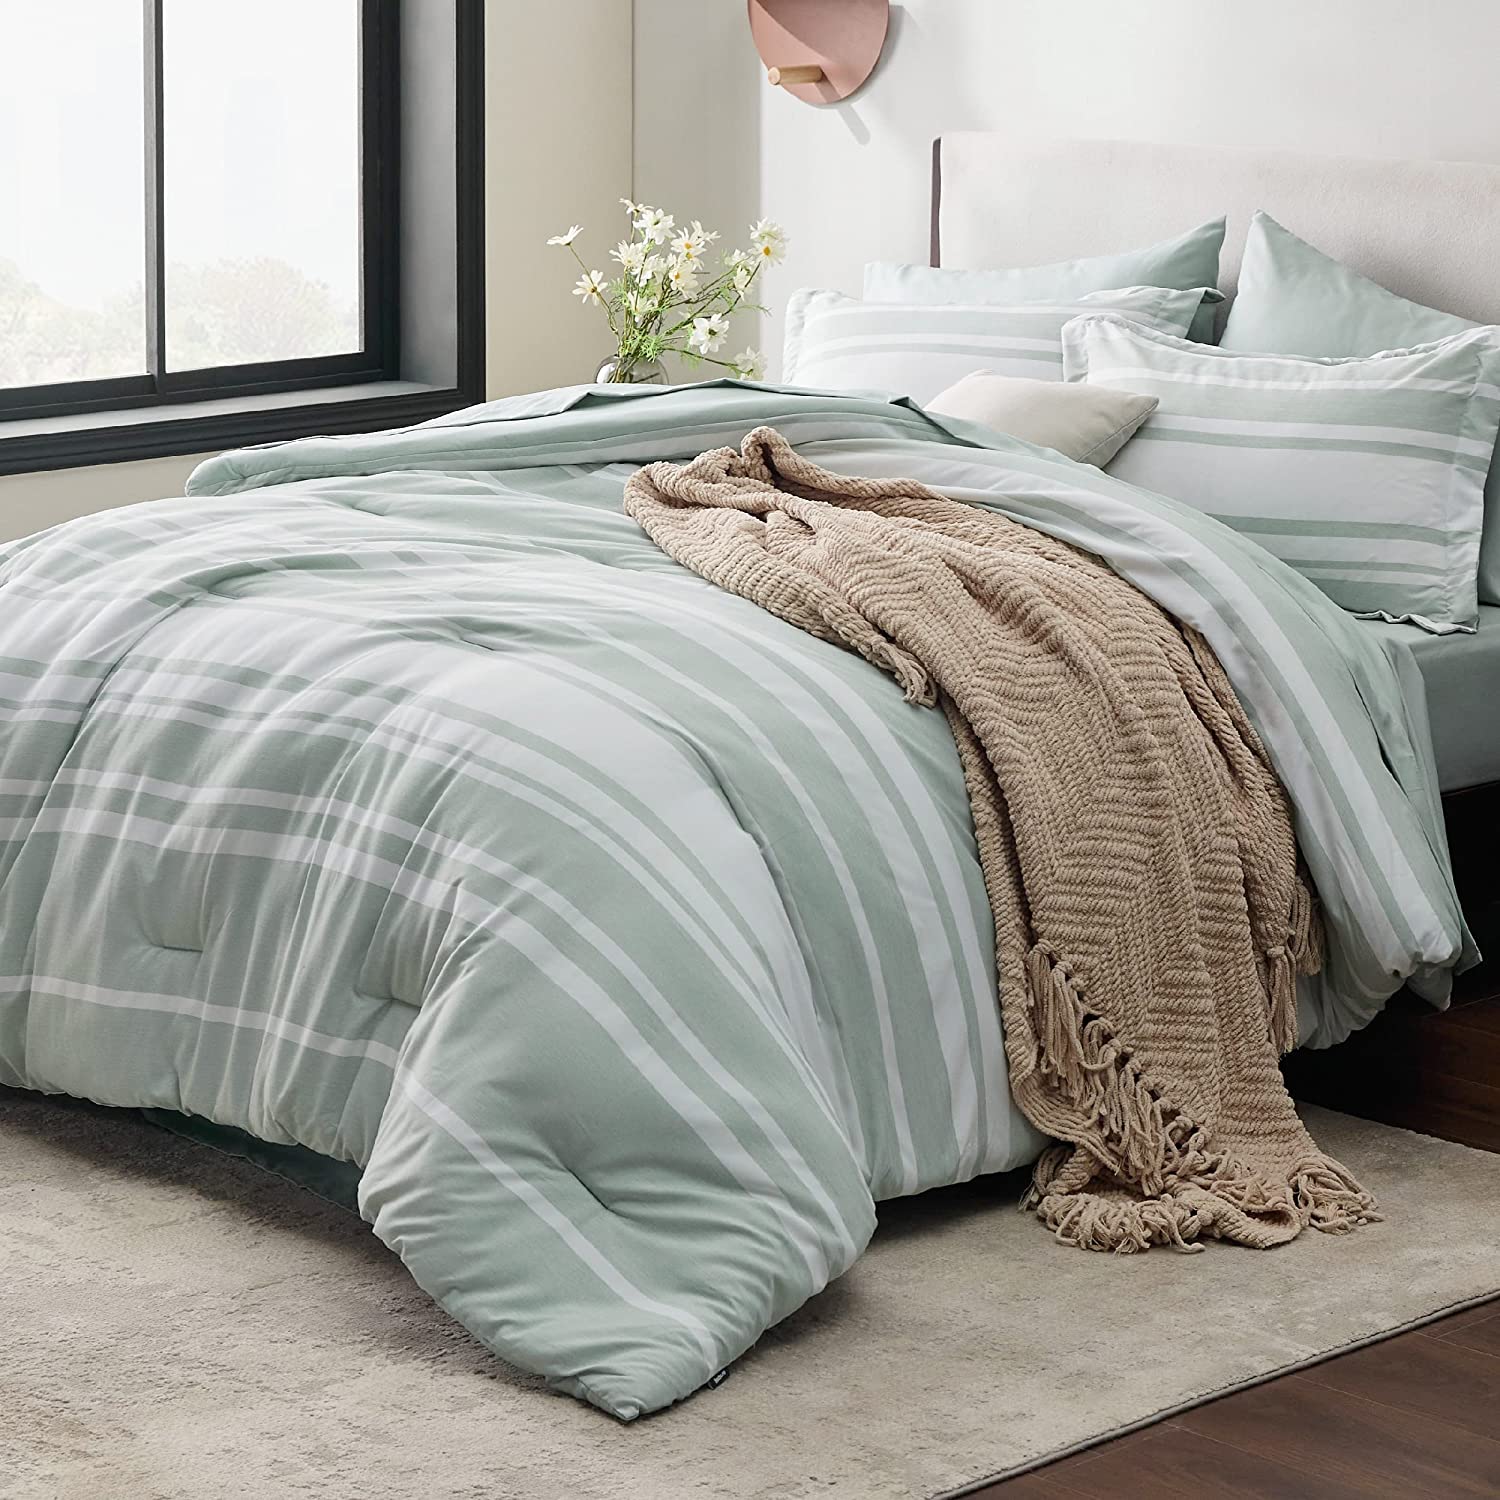 Bedsure Bedding Sets Queen 7 Pieces, Striped Blue Comforter Set